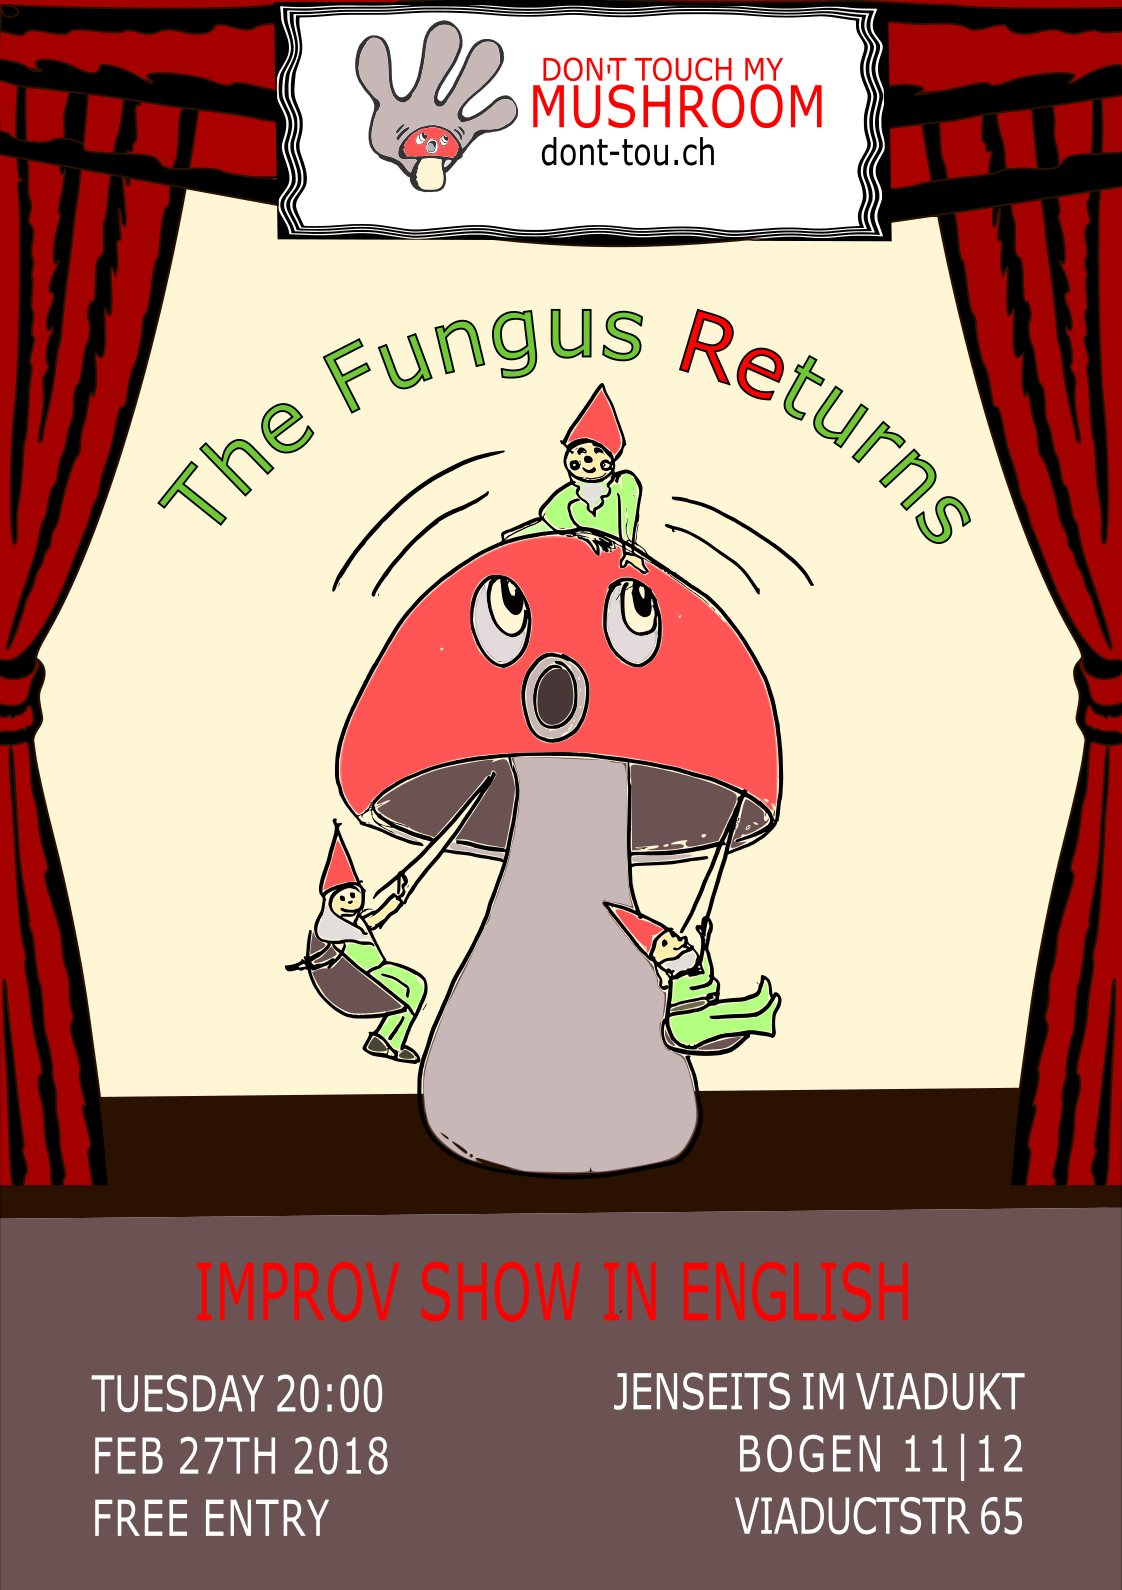 The fungus returns!